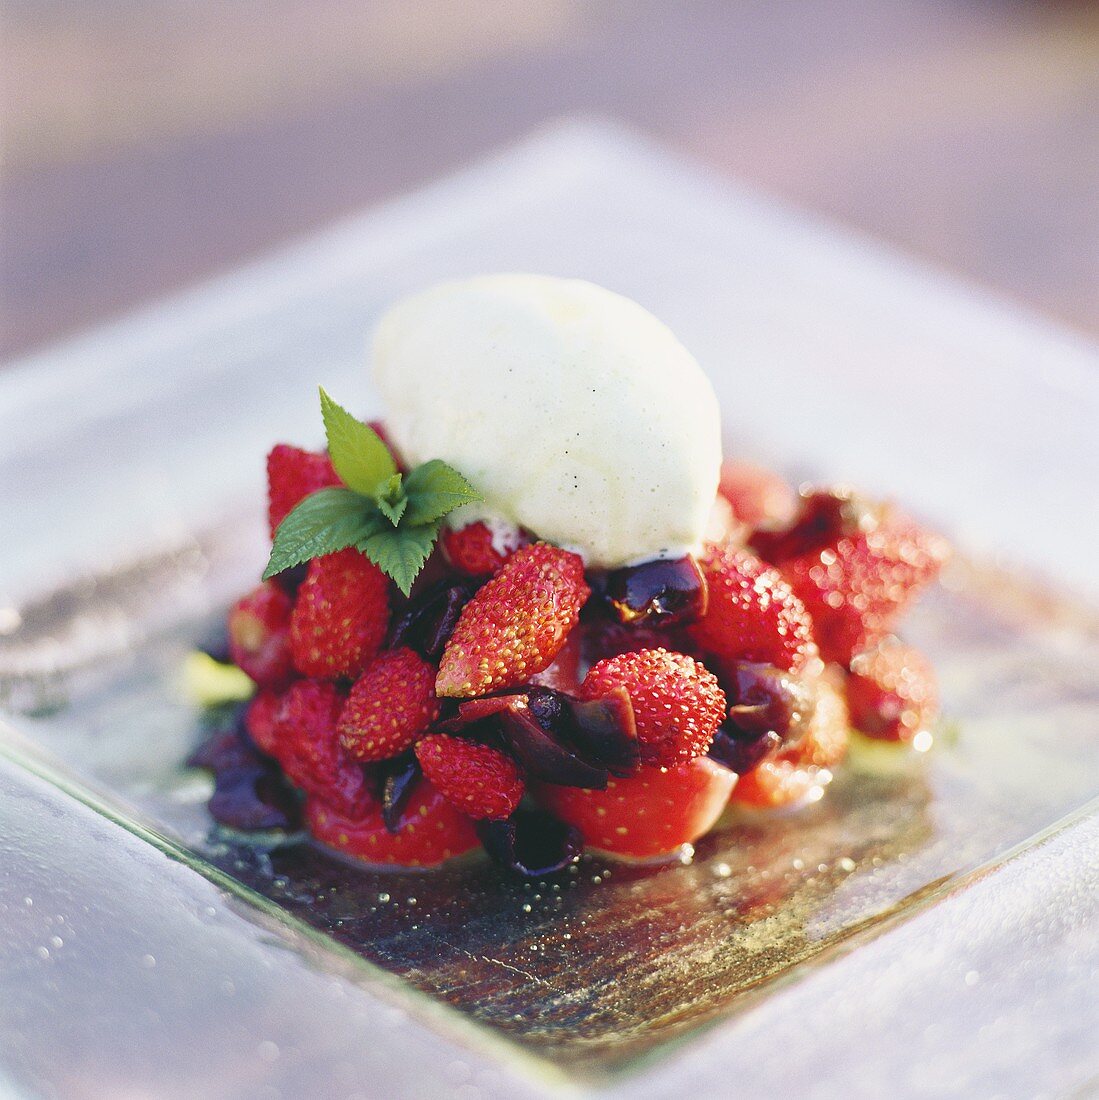 Vanilla ice cream on wild strawberries with olives